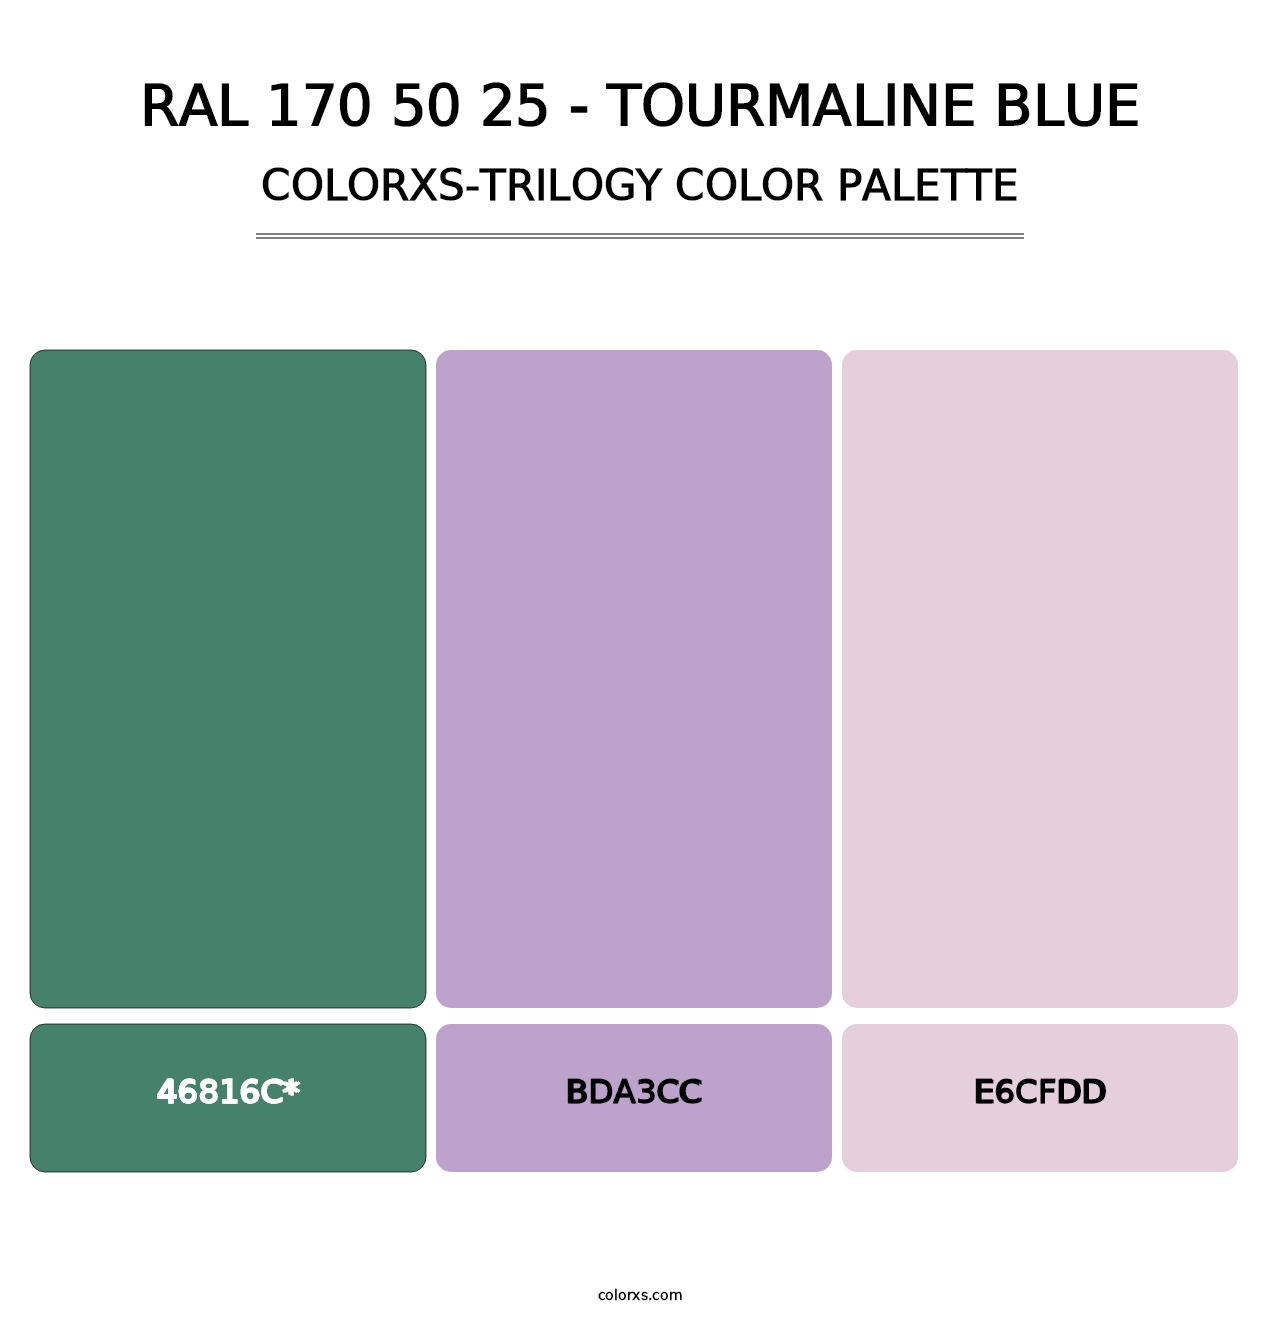 RAL 170 50 25 - Tourmaline Blue - Colorxs Trilogy Palette